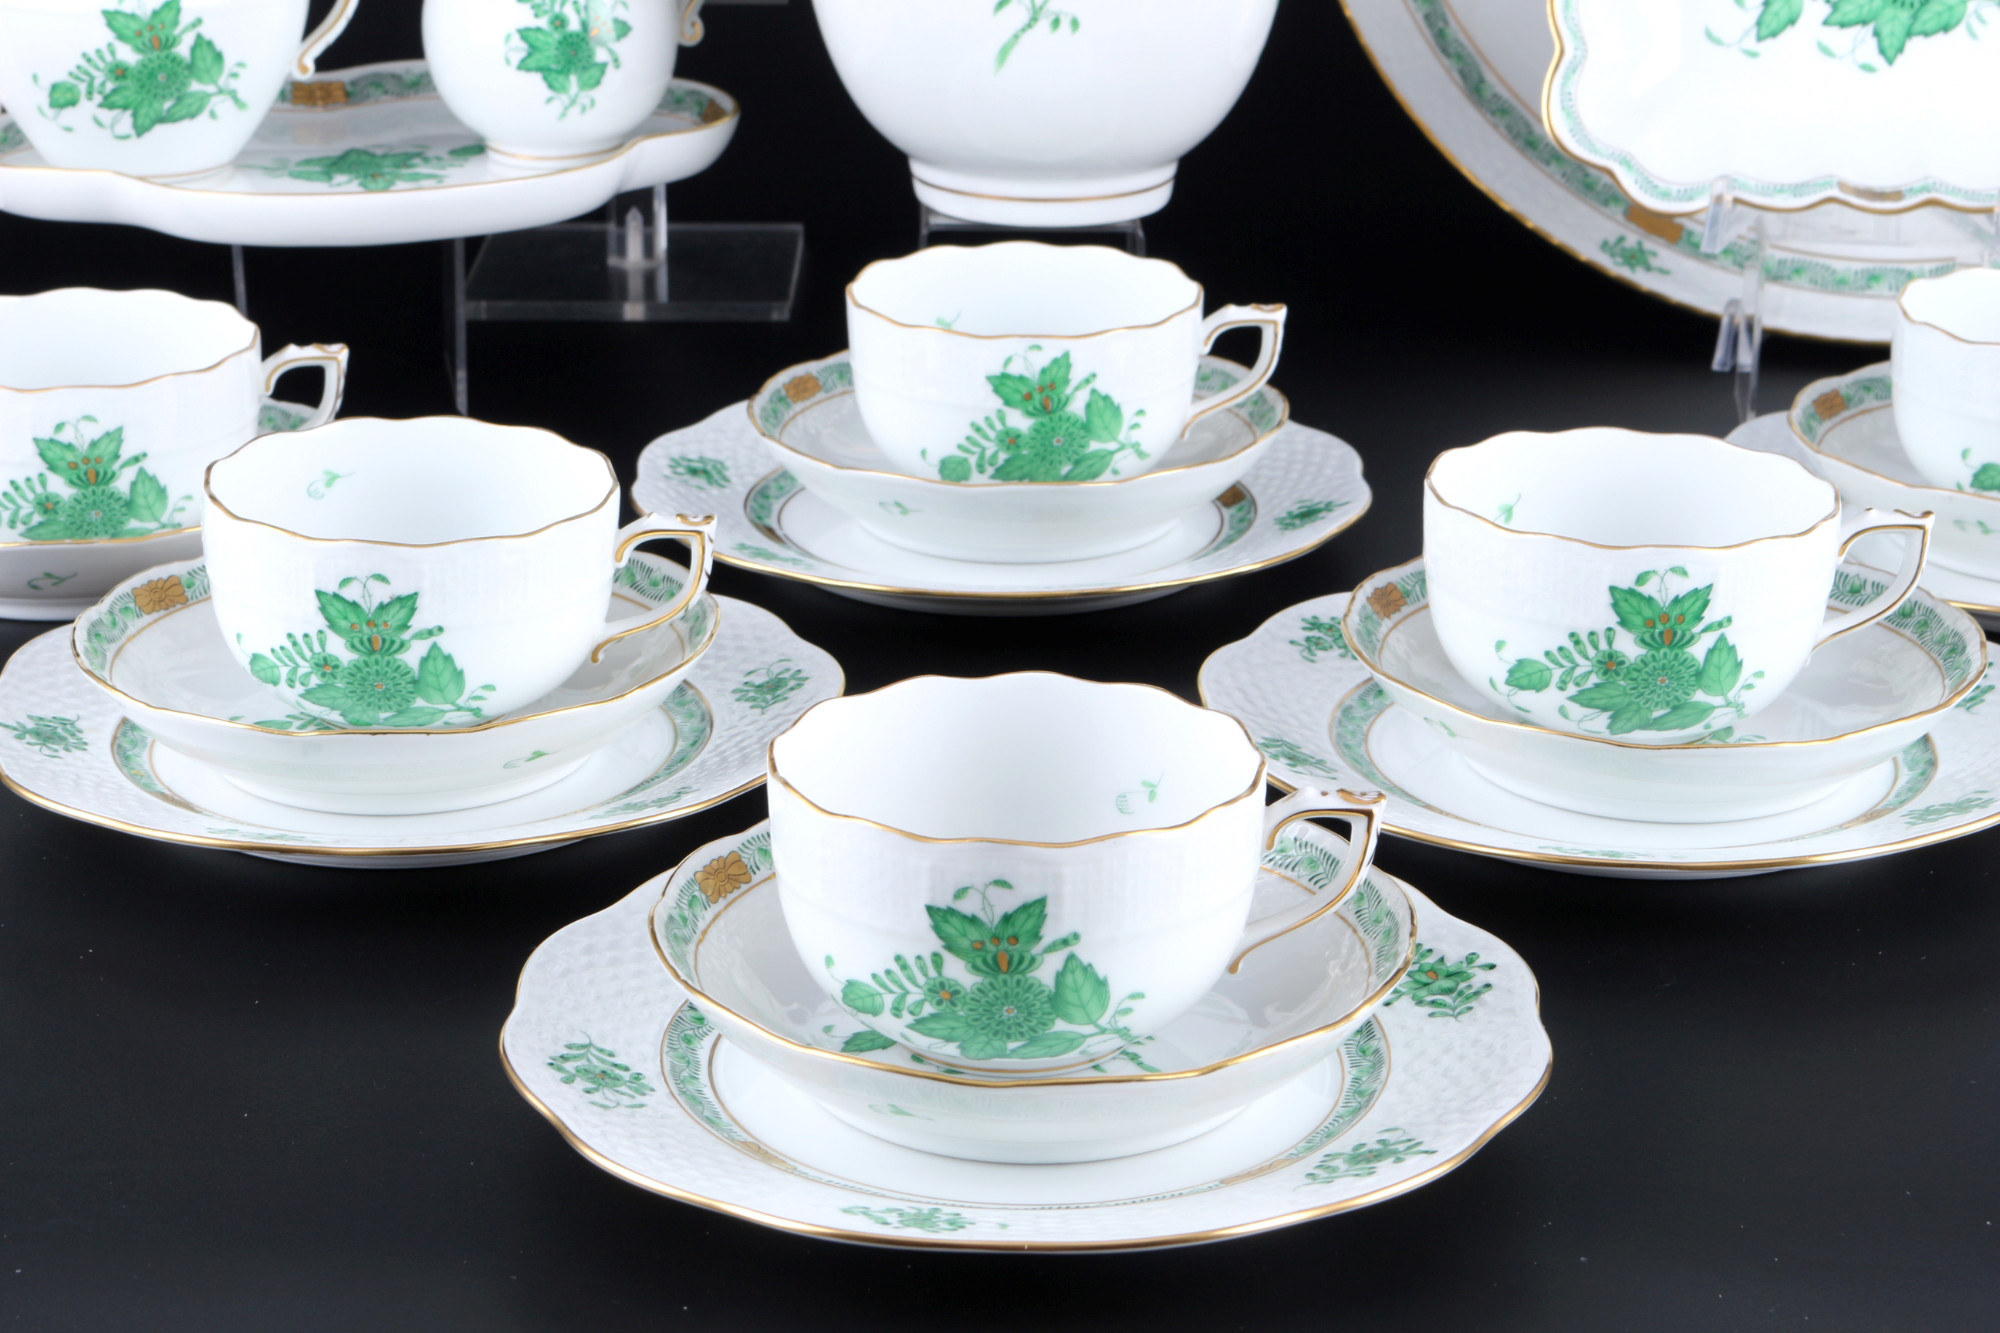 Herend Apponyi Vert tea service for 6 persons, Teeservice für 6 Personen, - Image 4 of 5